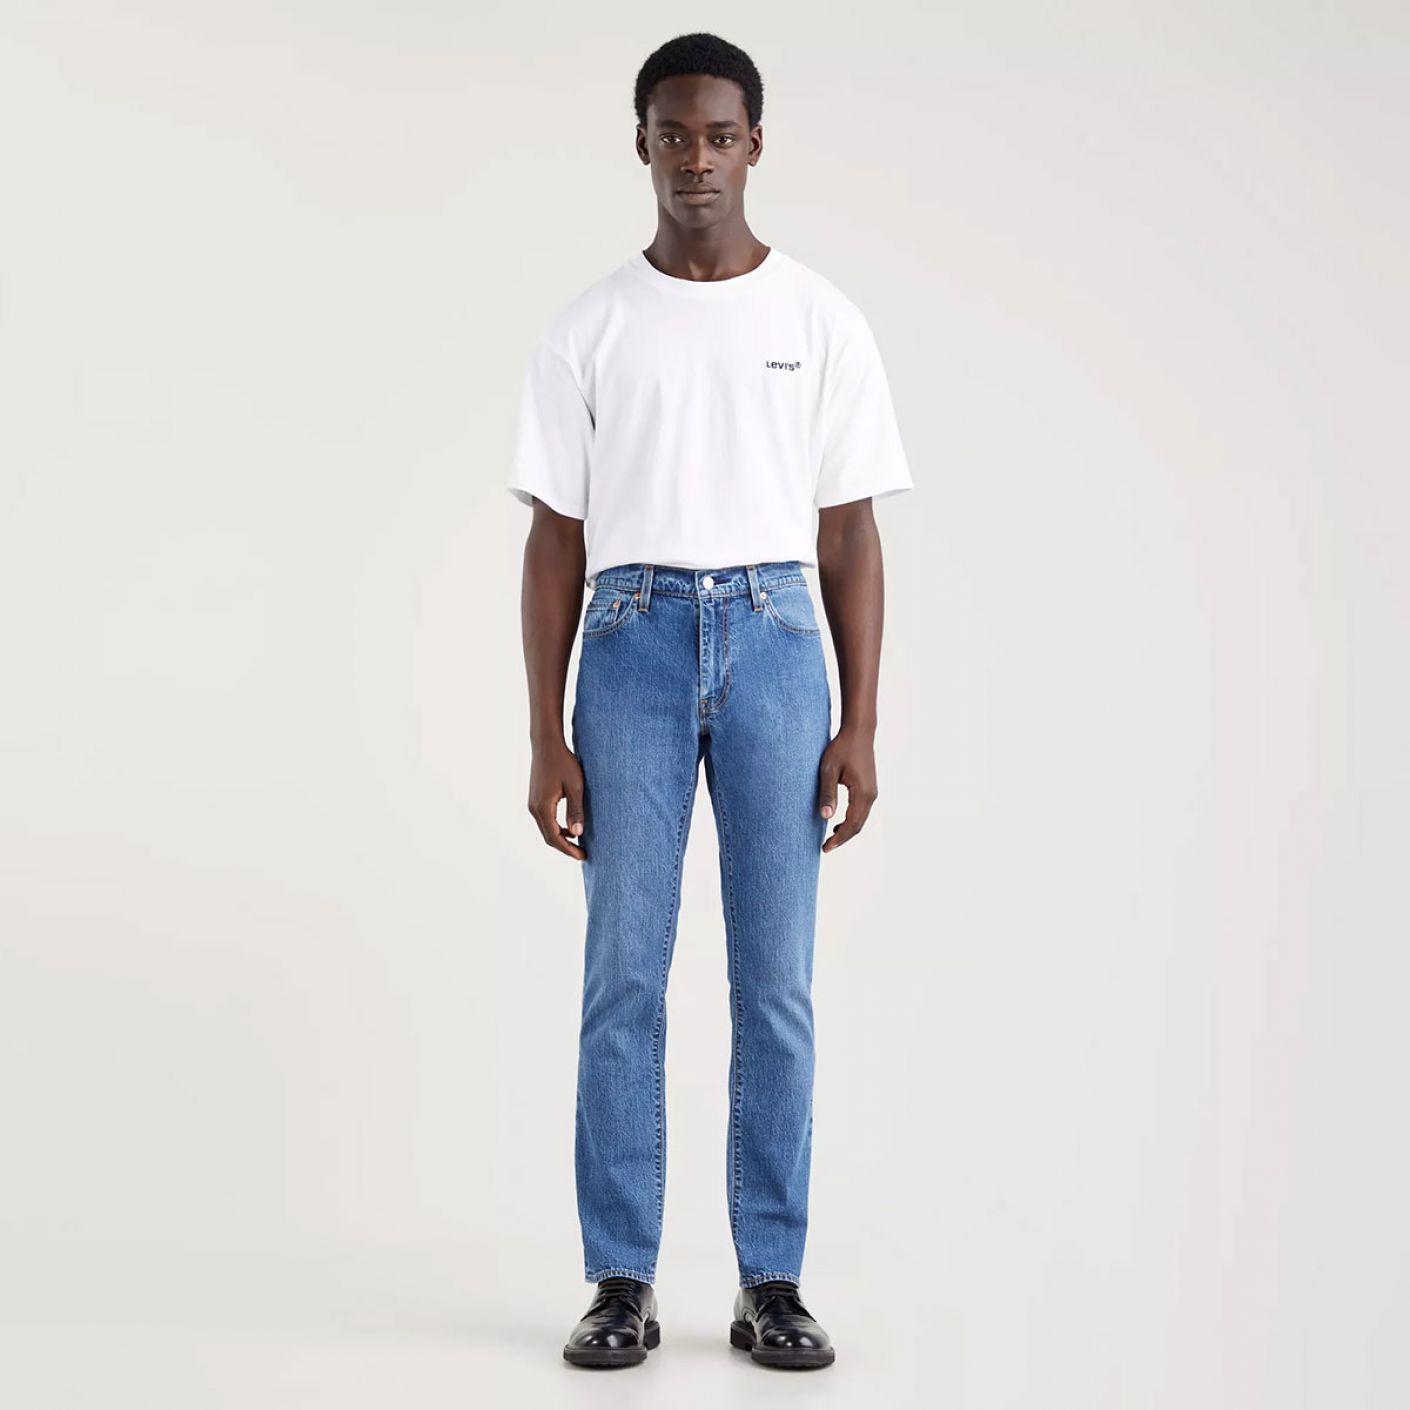 Levis Jeans 511 Slim Easy Mid - Blu